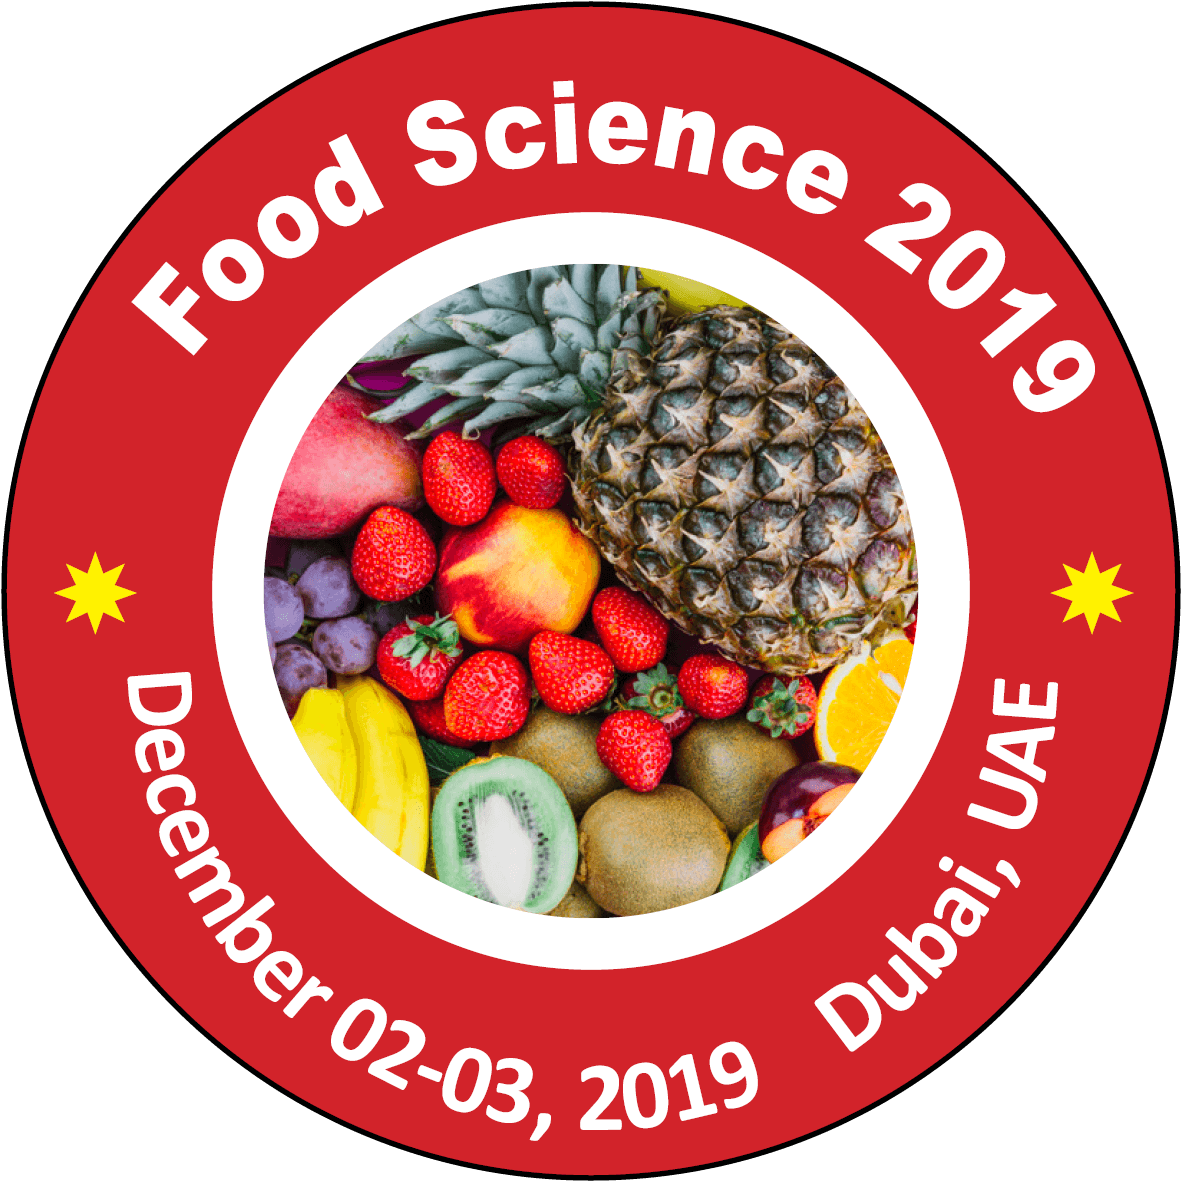 Food Science Conference2019 Dubai